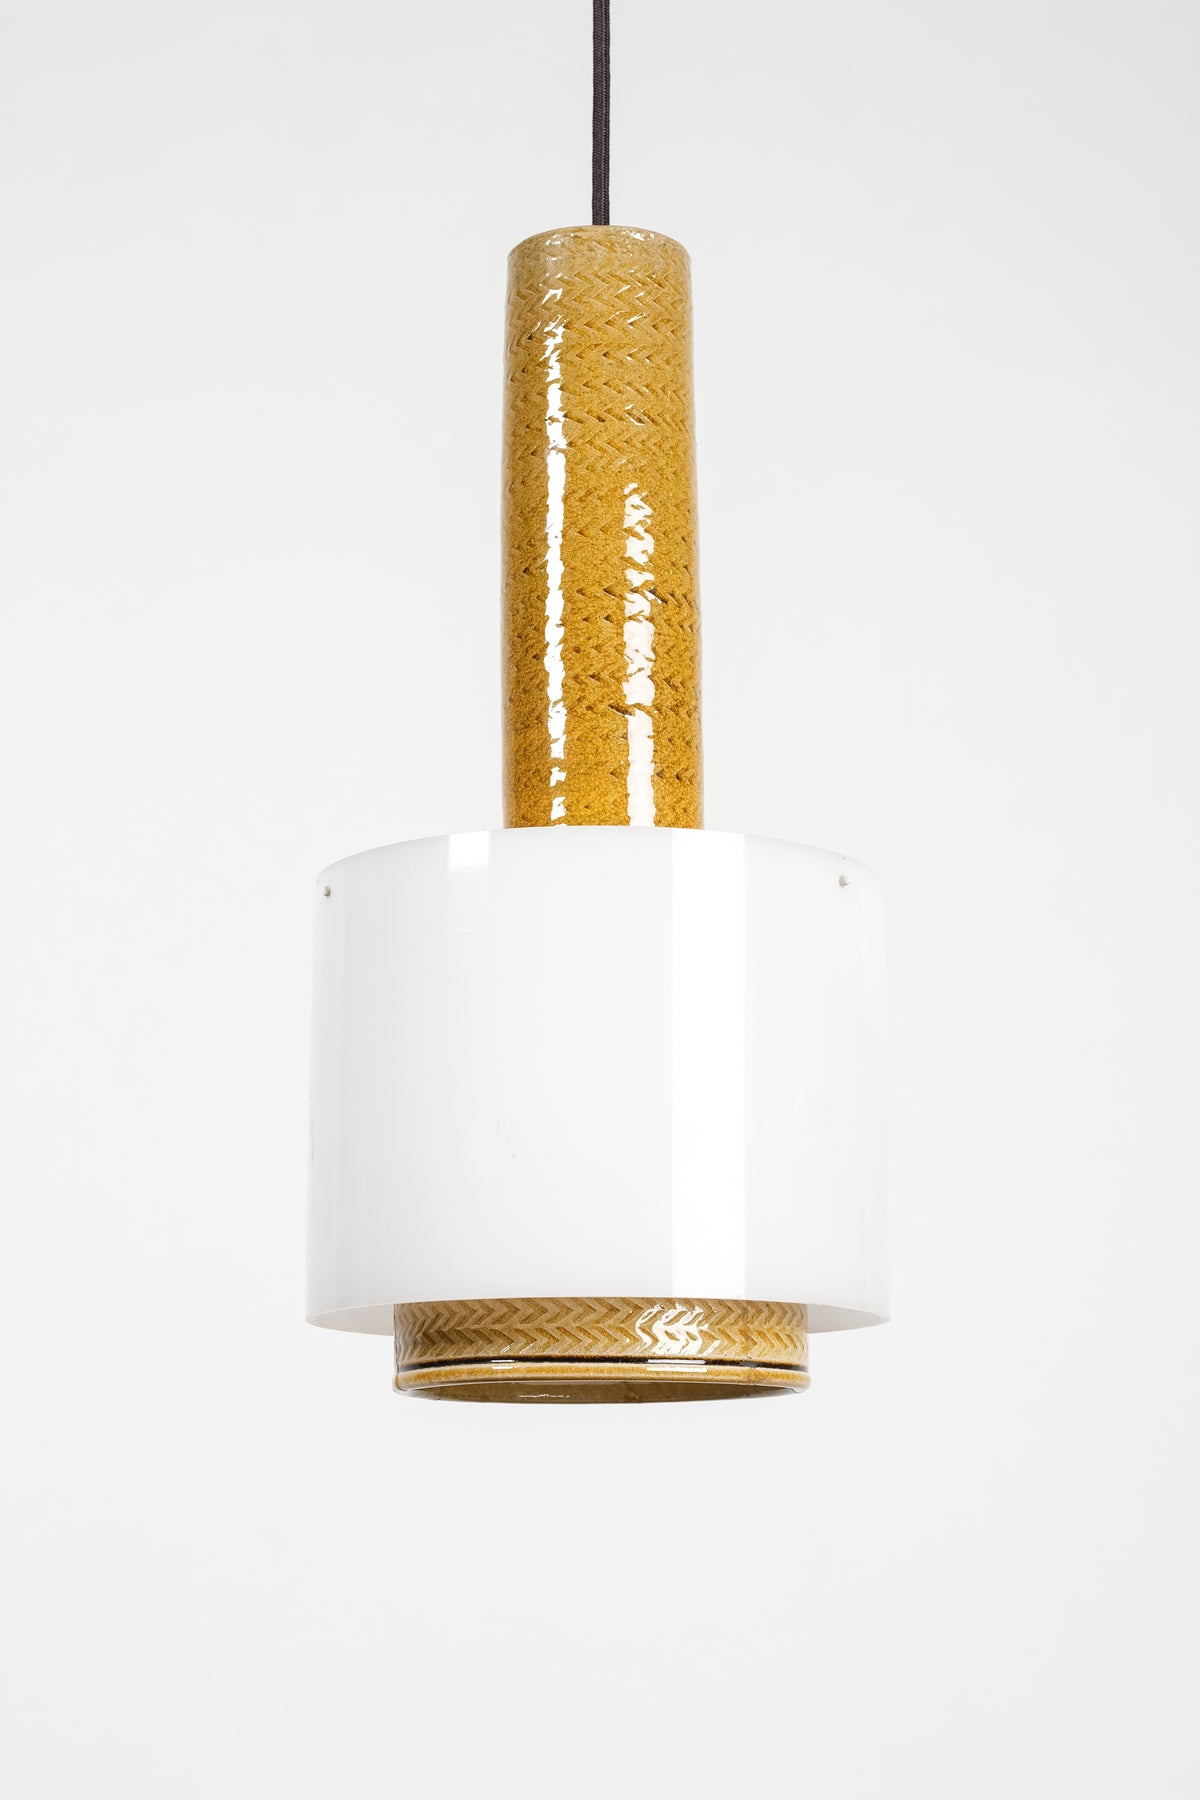 Nils Kähler, Ceiling Lamp, Kähler, Denmark, 50s